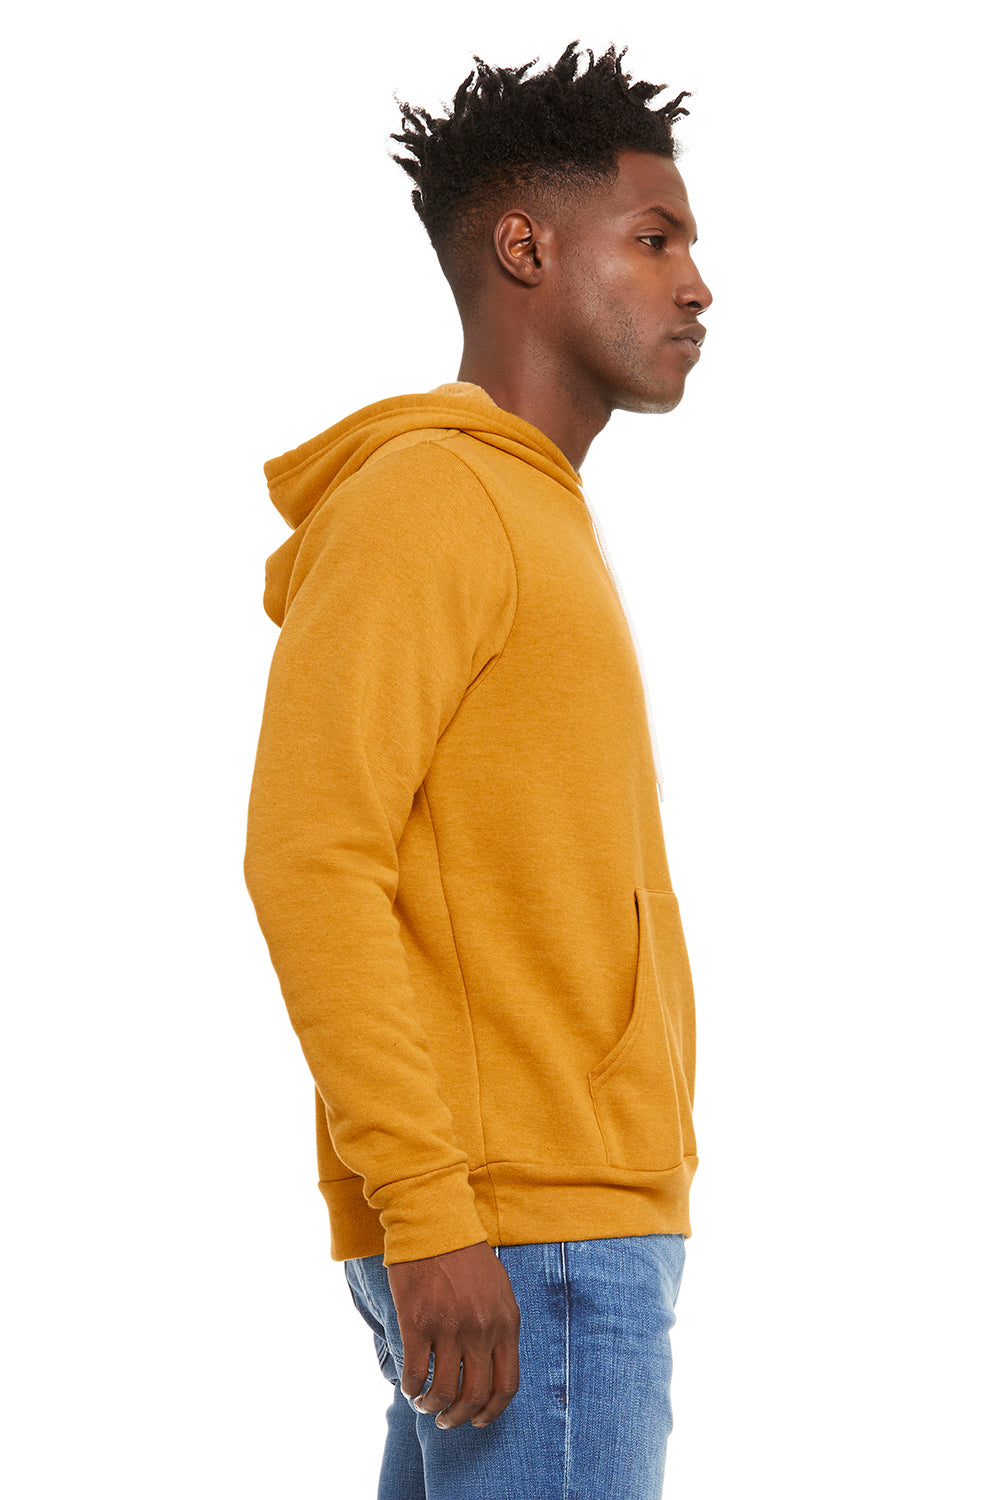 Bella + Canvas BC3719/3719 Mens Sponge Fleece Hooded Sweatshirt Hoodie Heather Mustard Yellow Model Side